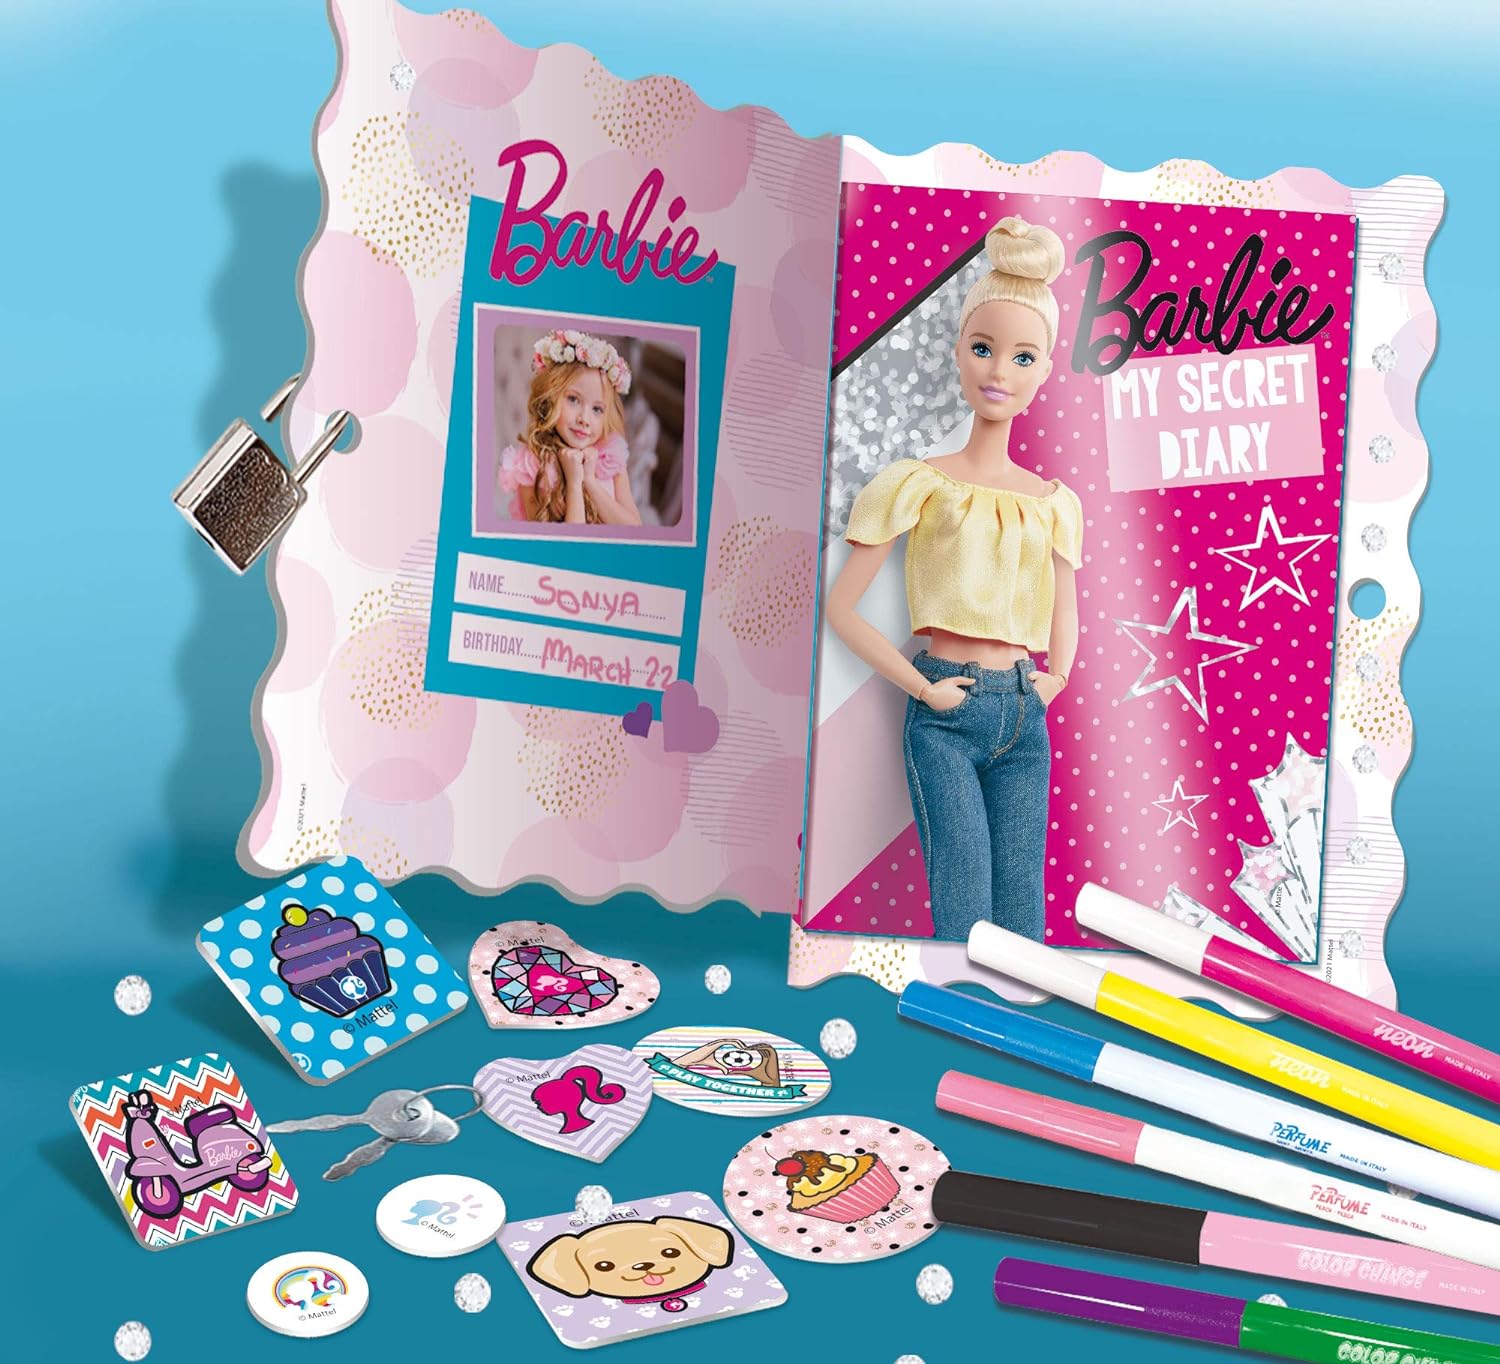 Diario segreto Barbie